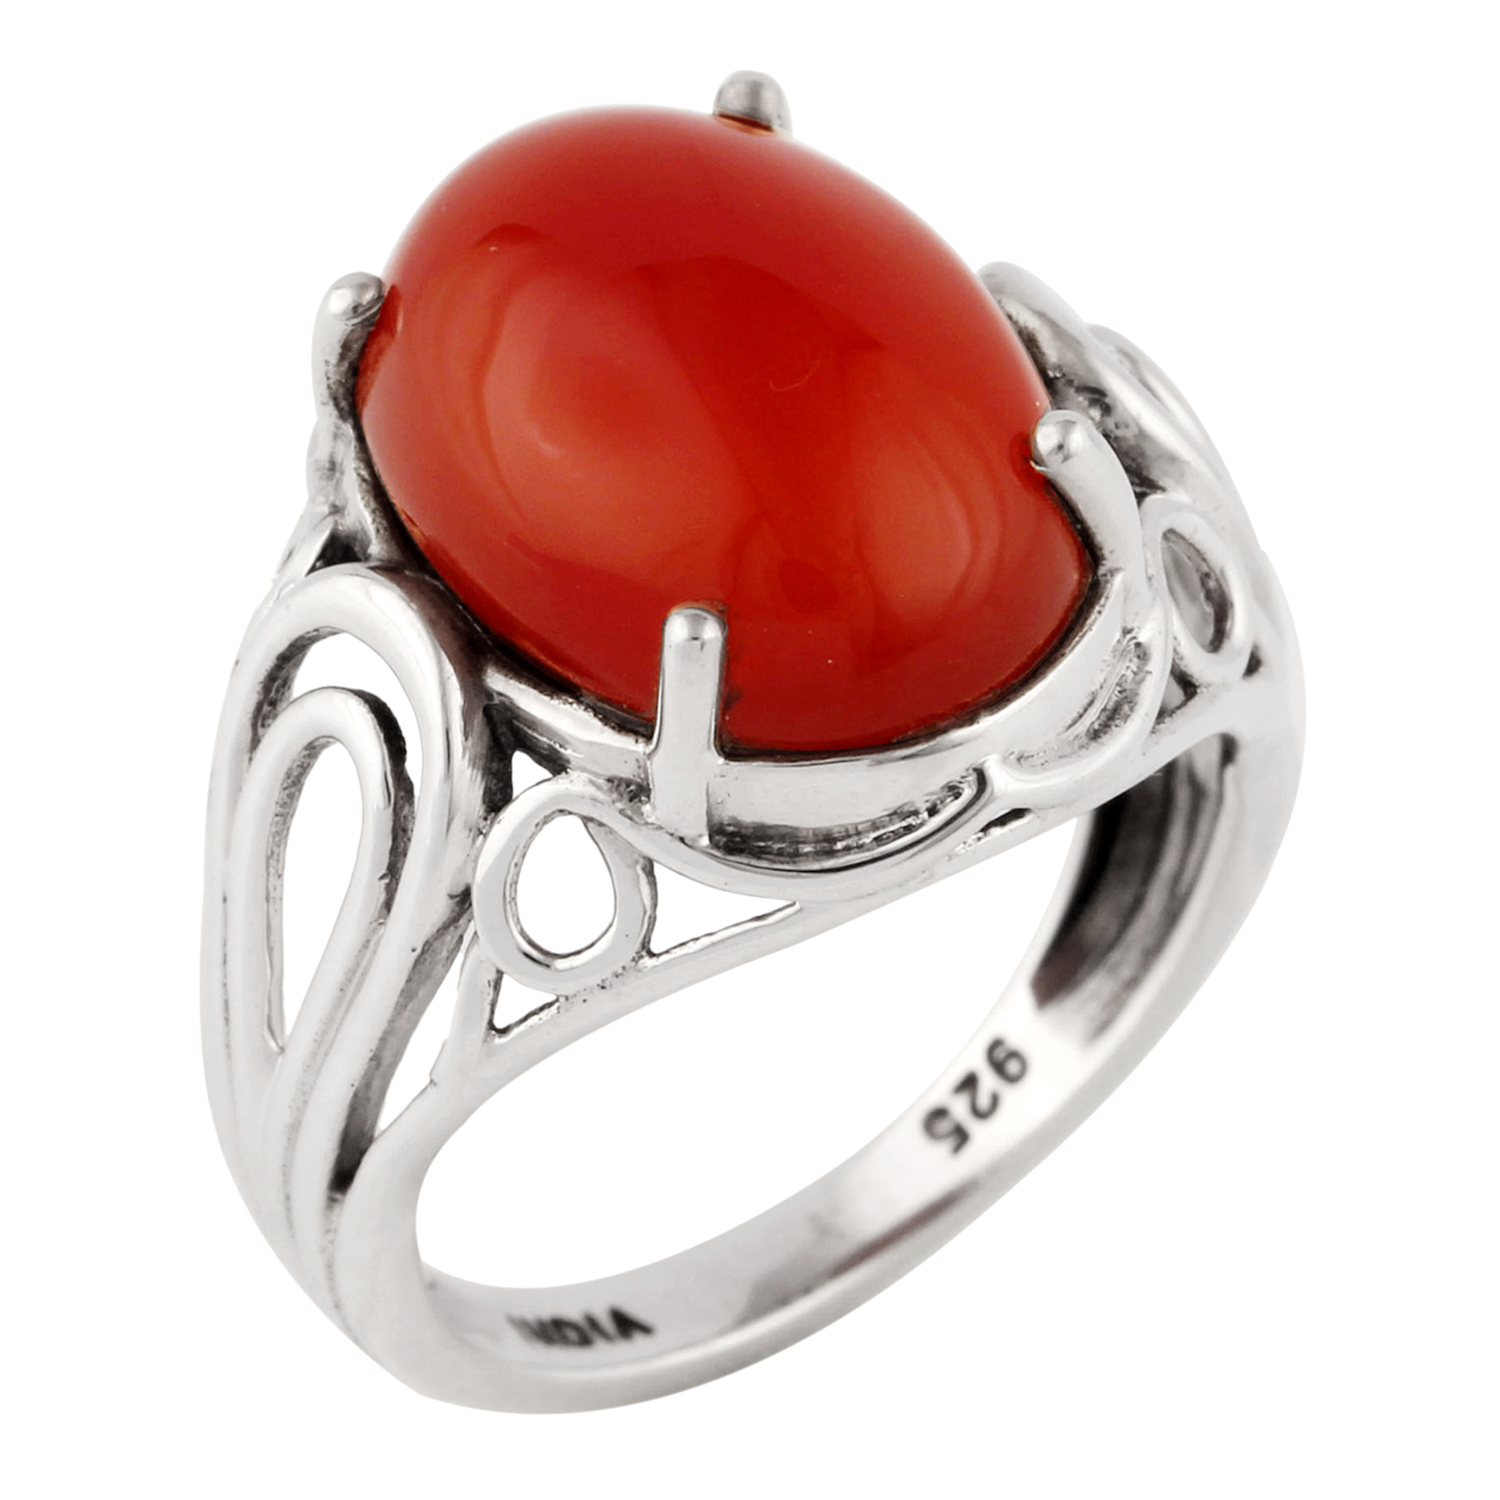 Red Onyx Gemstone Ring